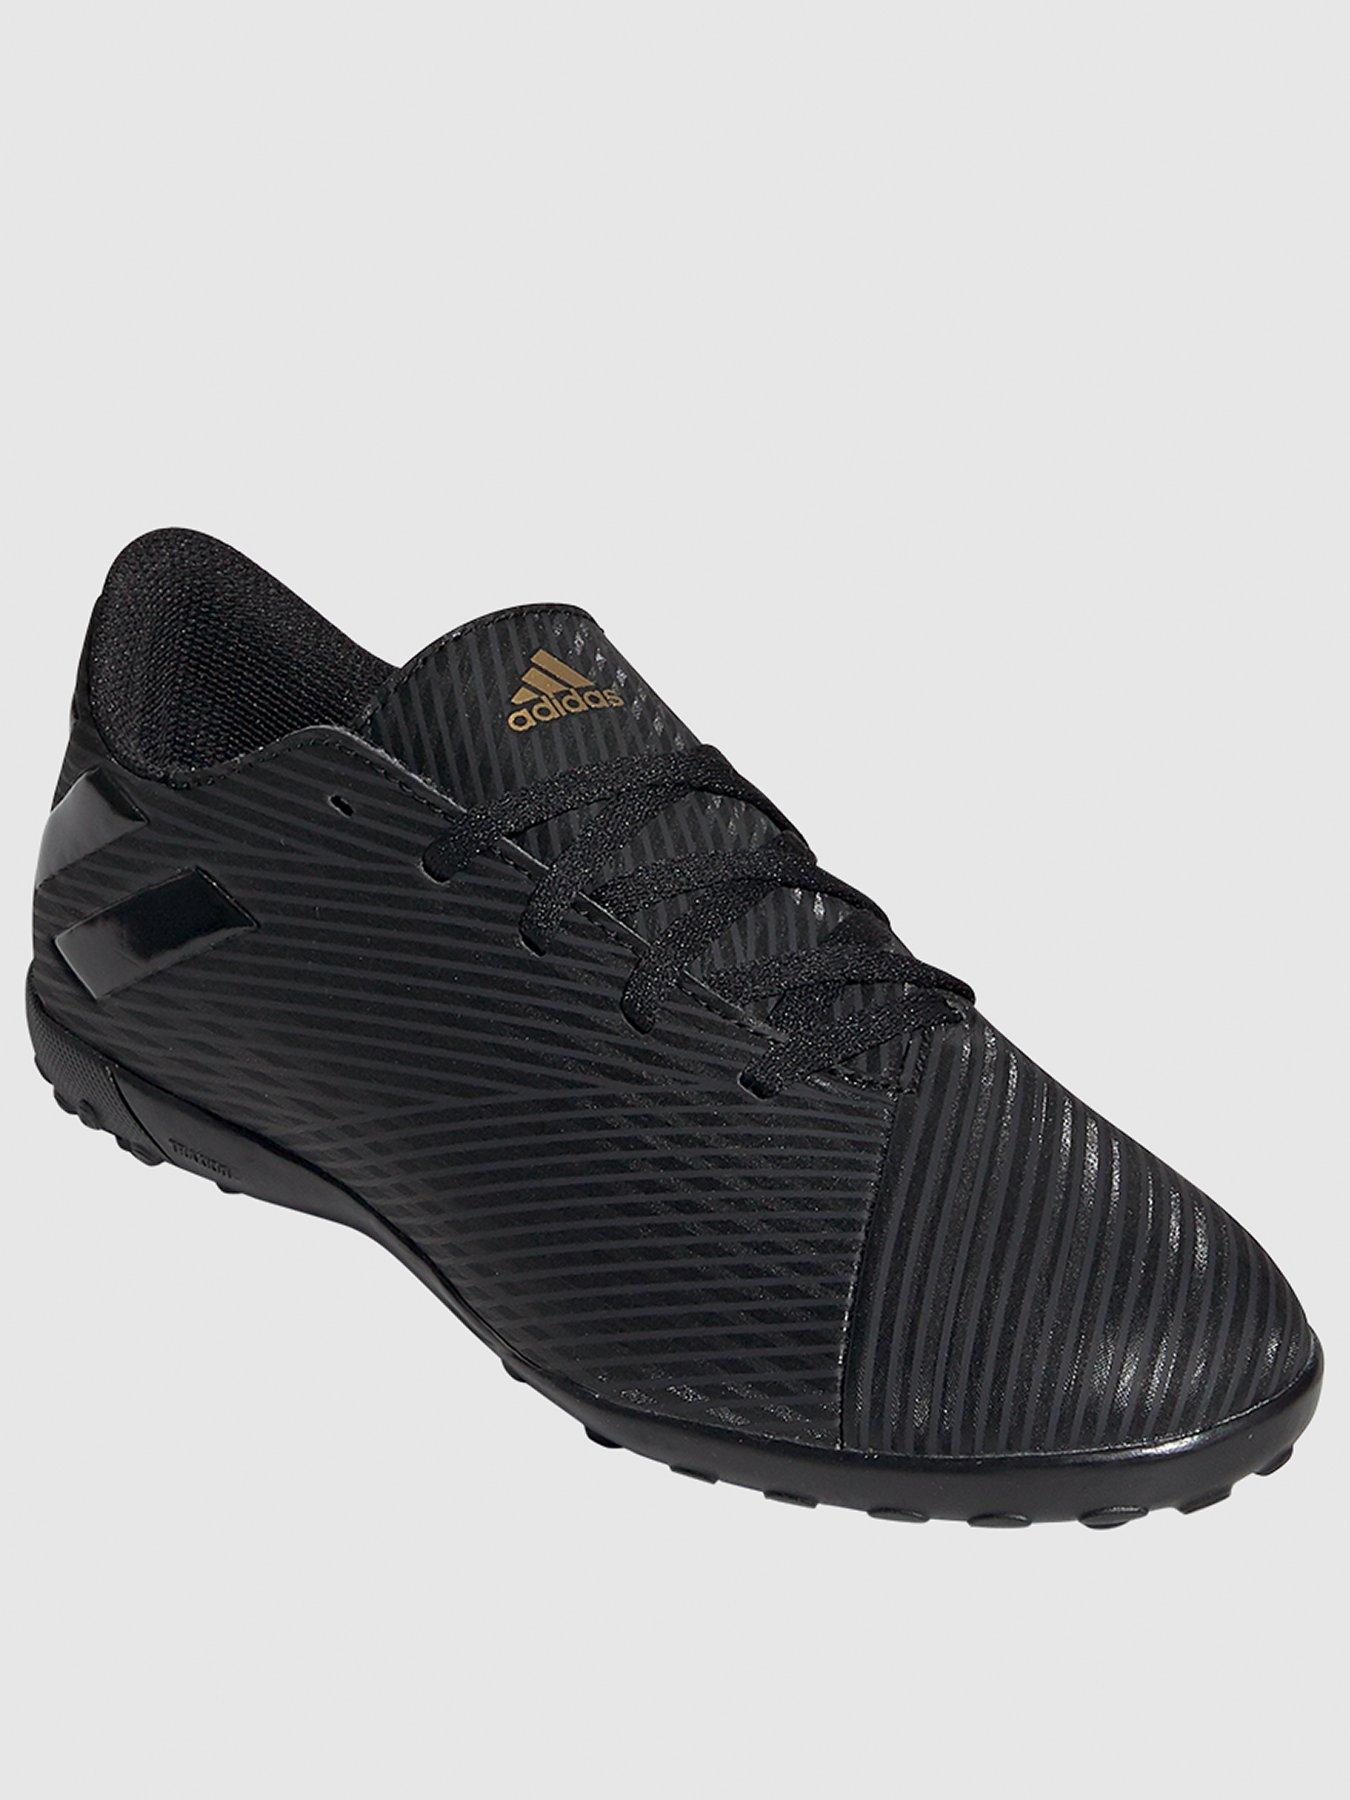 black adidas astro turf